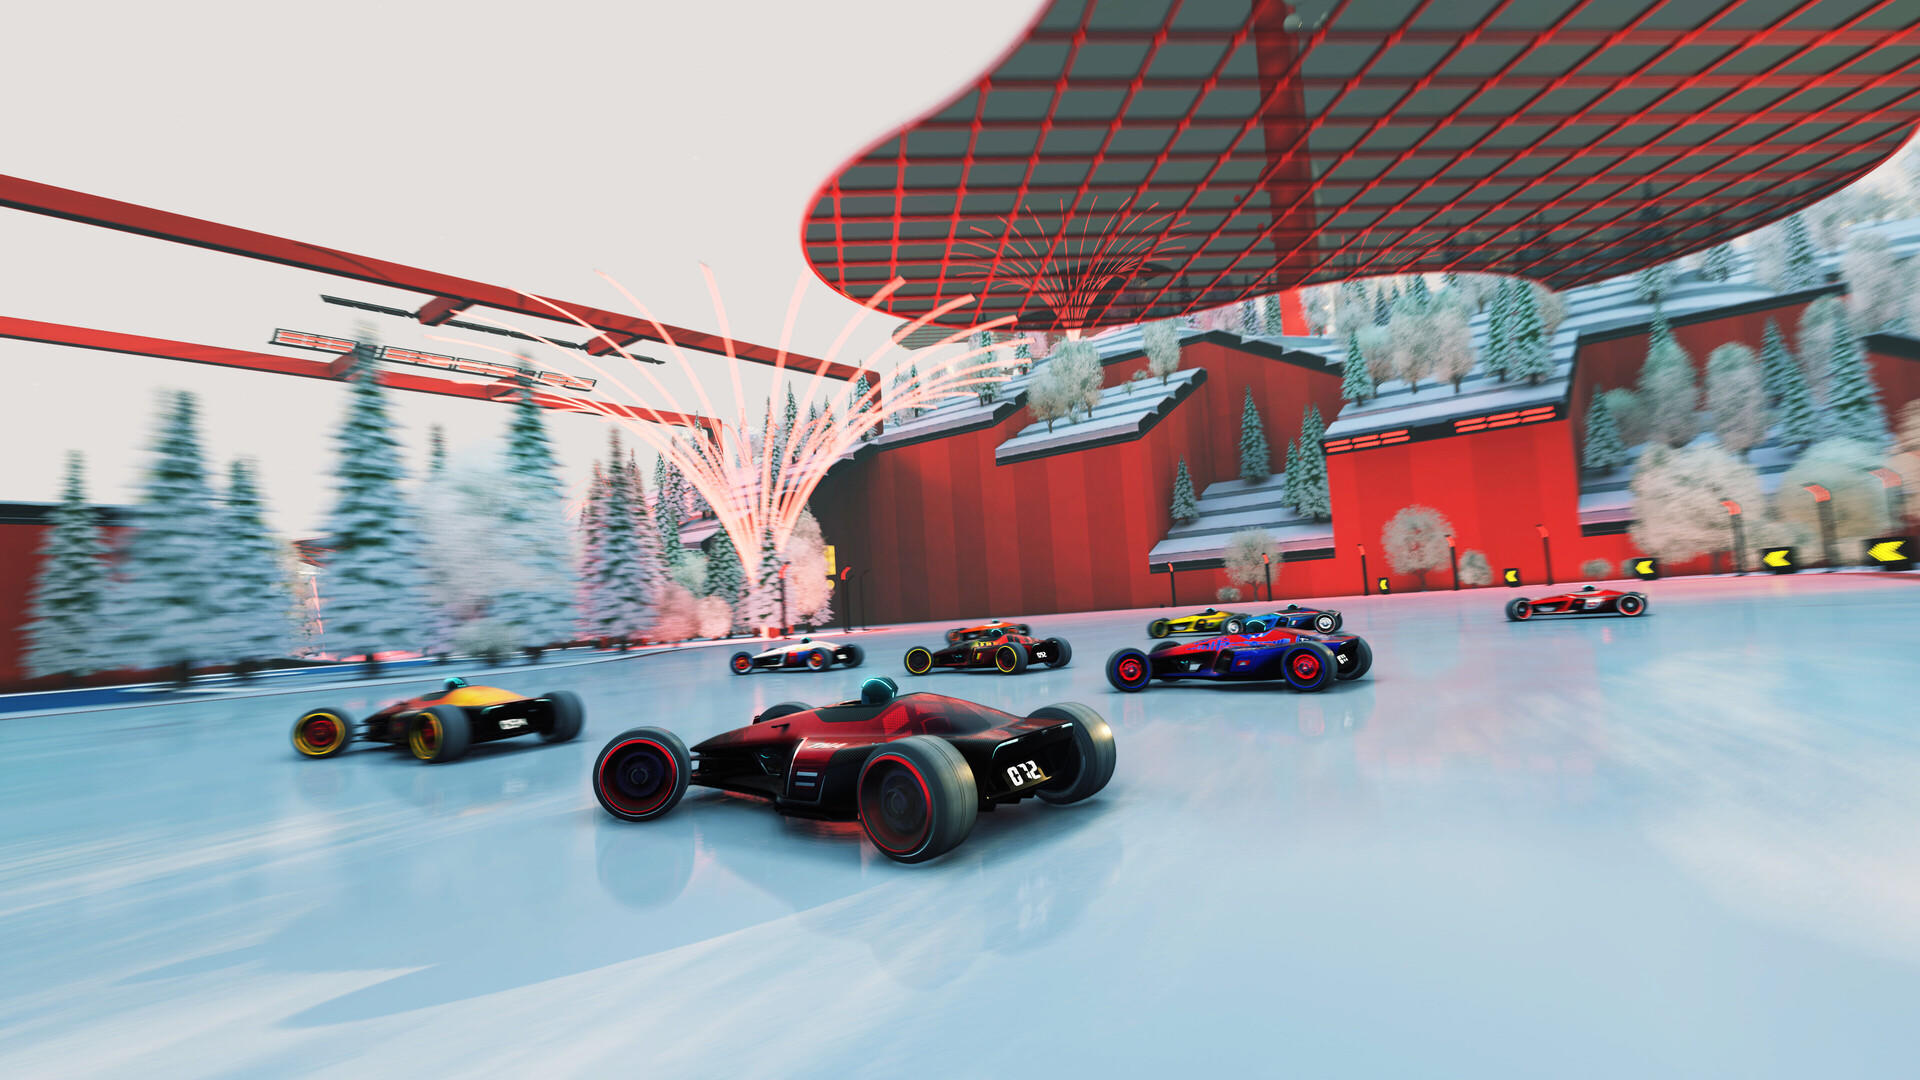 Trackmania screenshot game